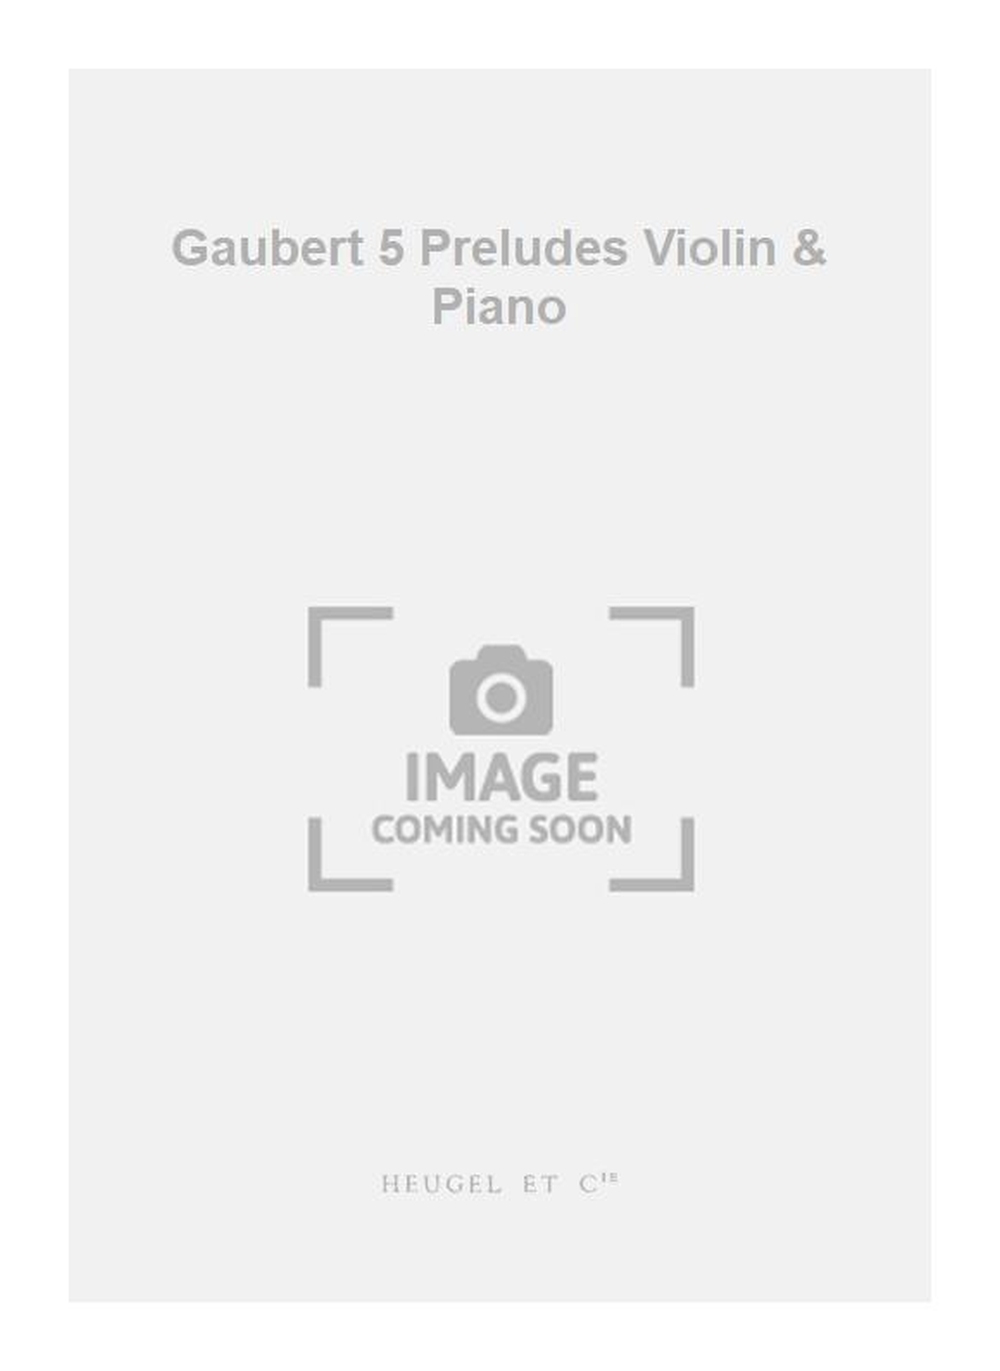 Philippe Gaubert: Gaubert 5 Preludes Violin & Piano